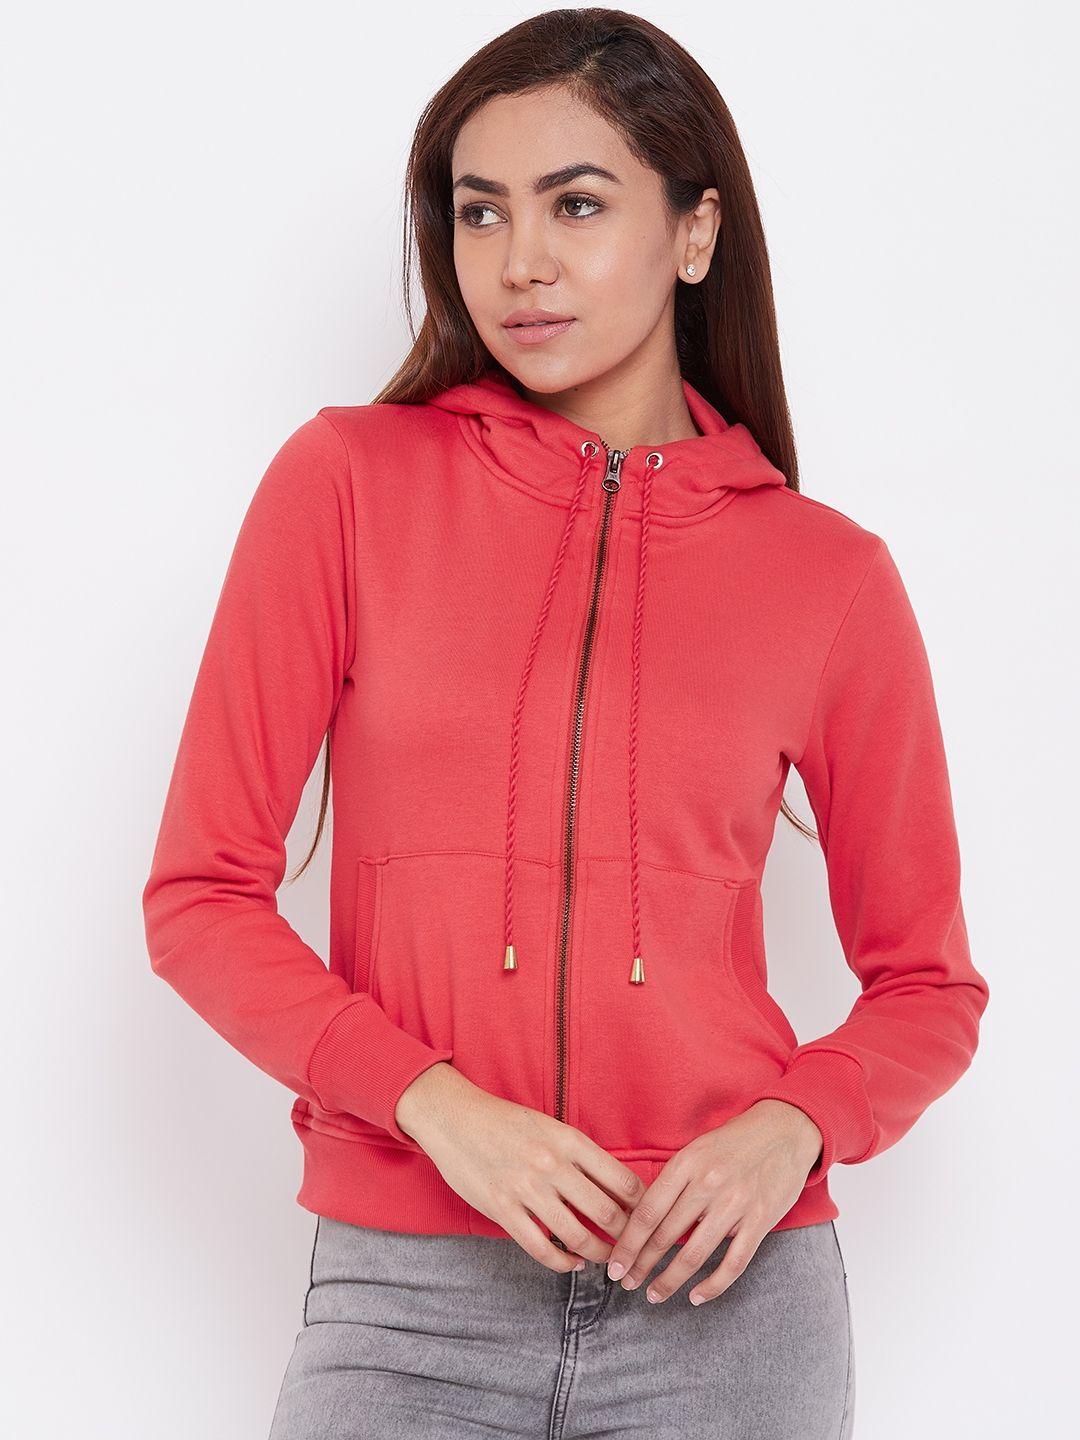 alsace lorraine paris women coral red solid hooded sweatshirt